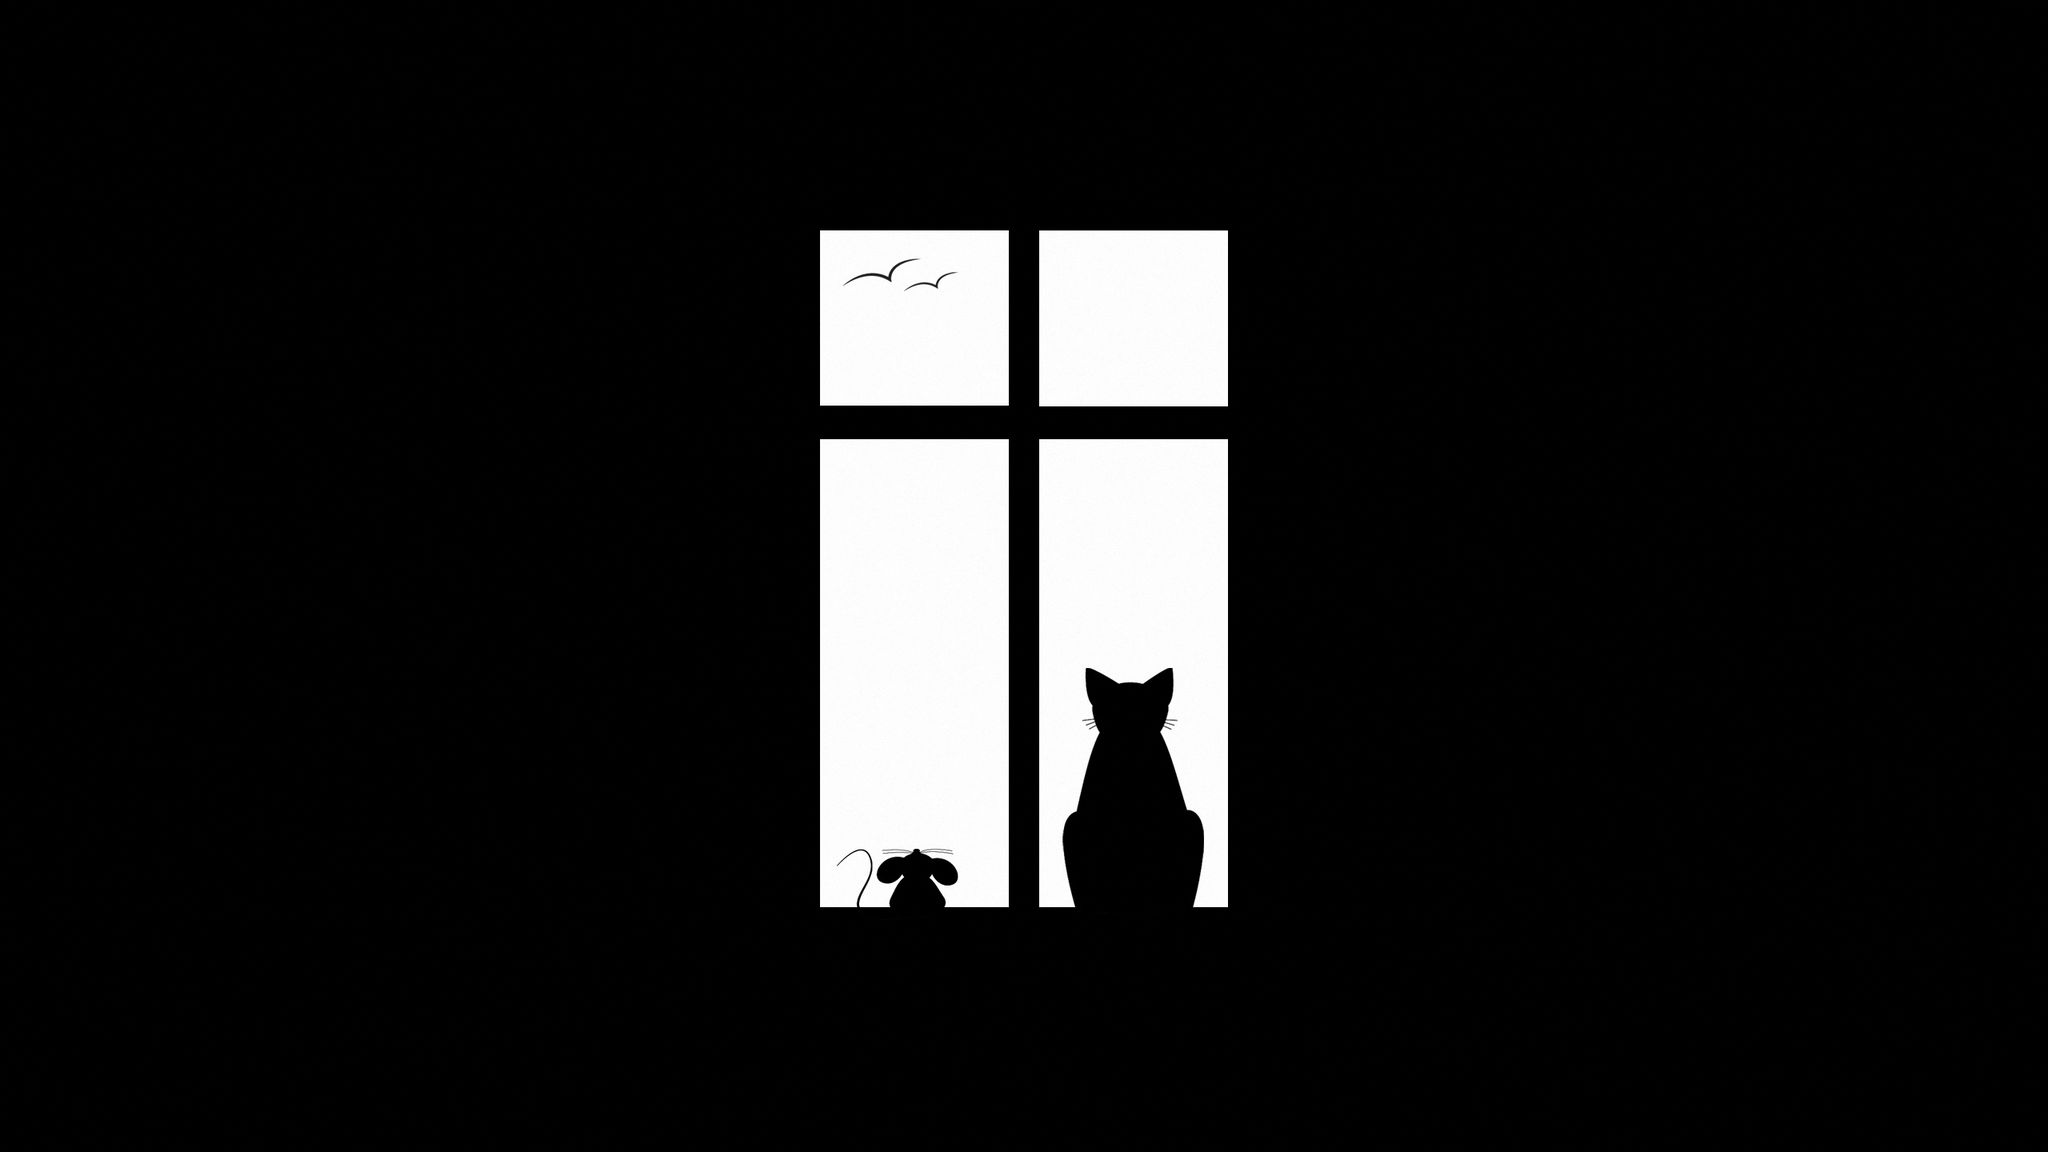 2048x1152 Wallpaper cat, picture, window, silhouette